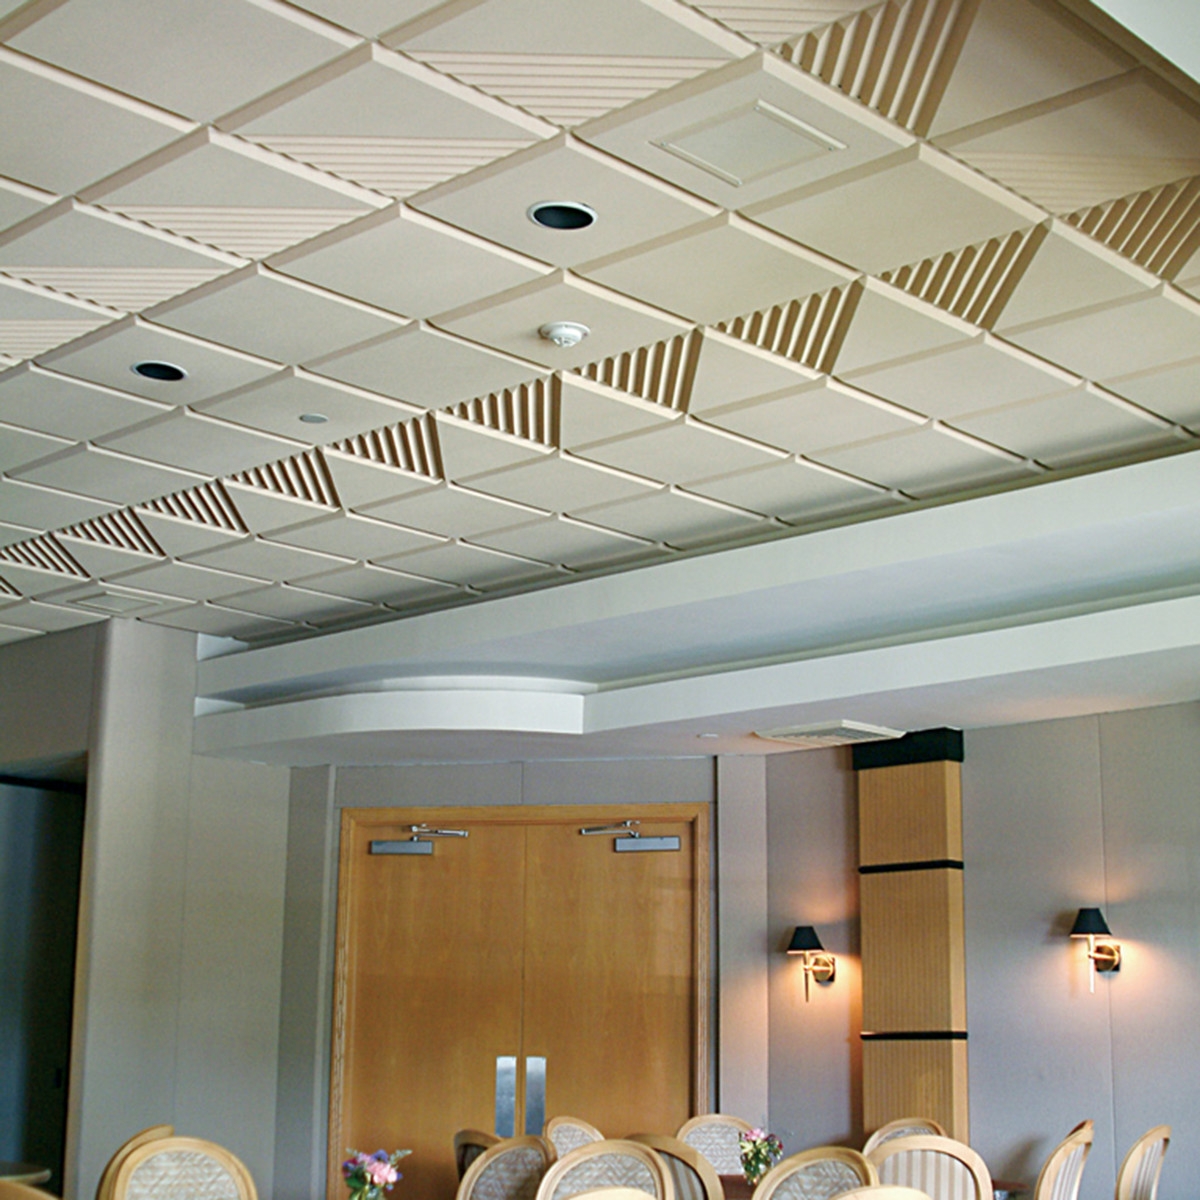 Standard Ceiling Tile Sizes Standard Ceiling Tile Sizes sonex contour ceiling tile acoustical solutions 1200 X 1200